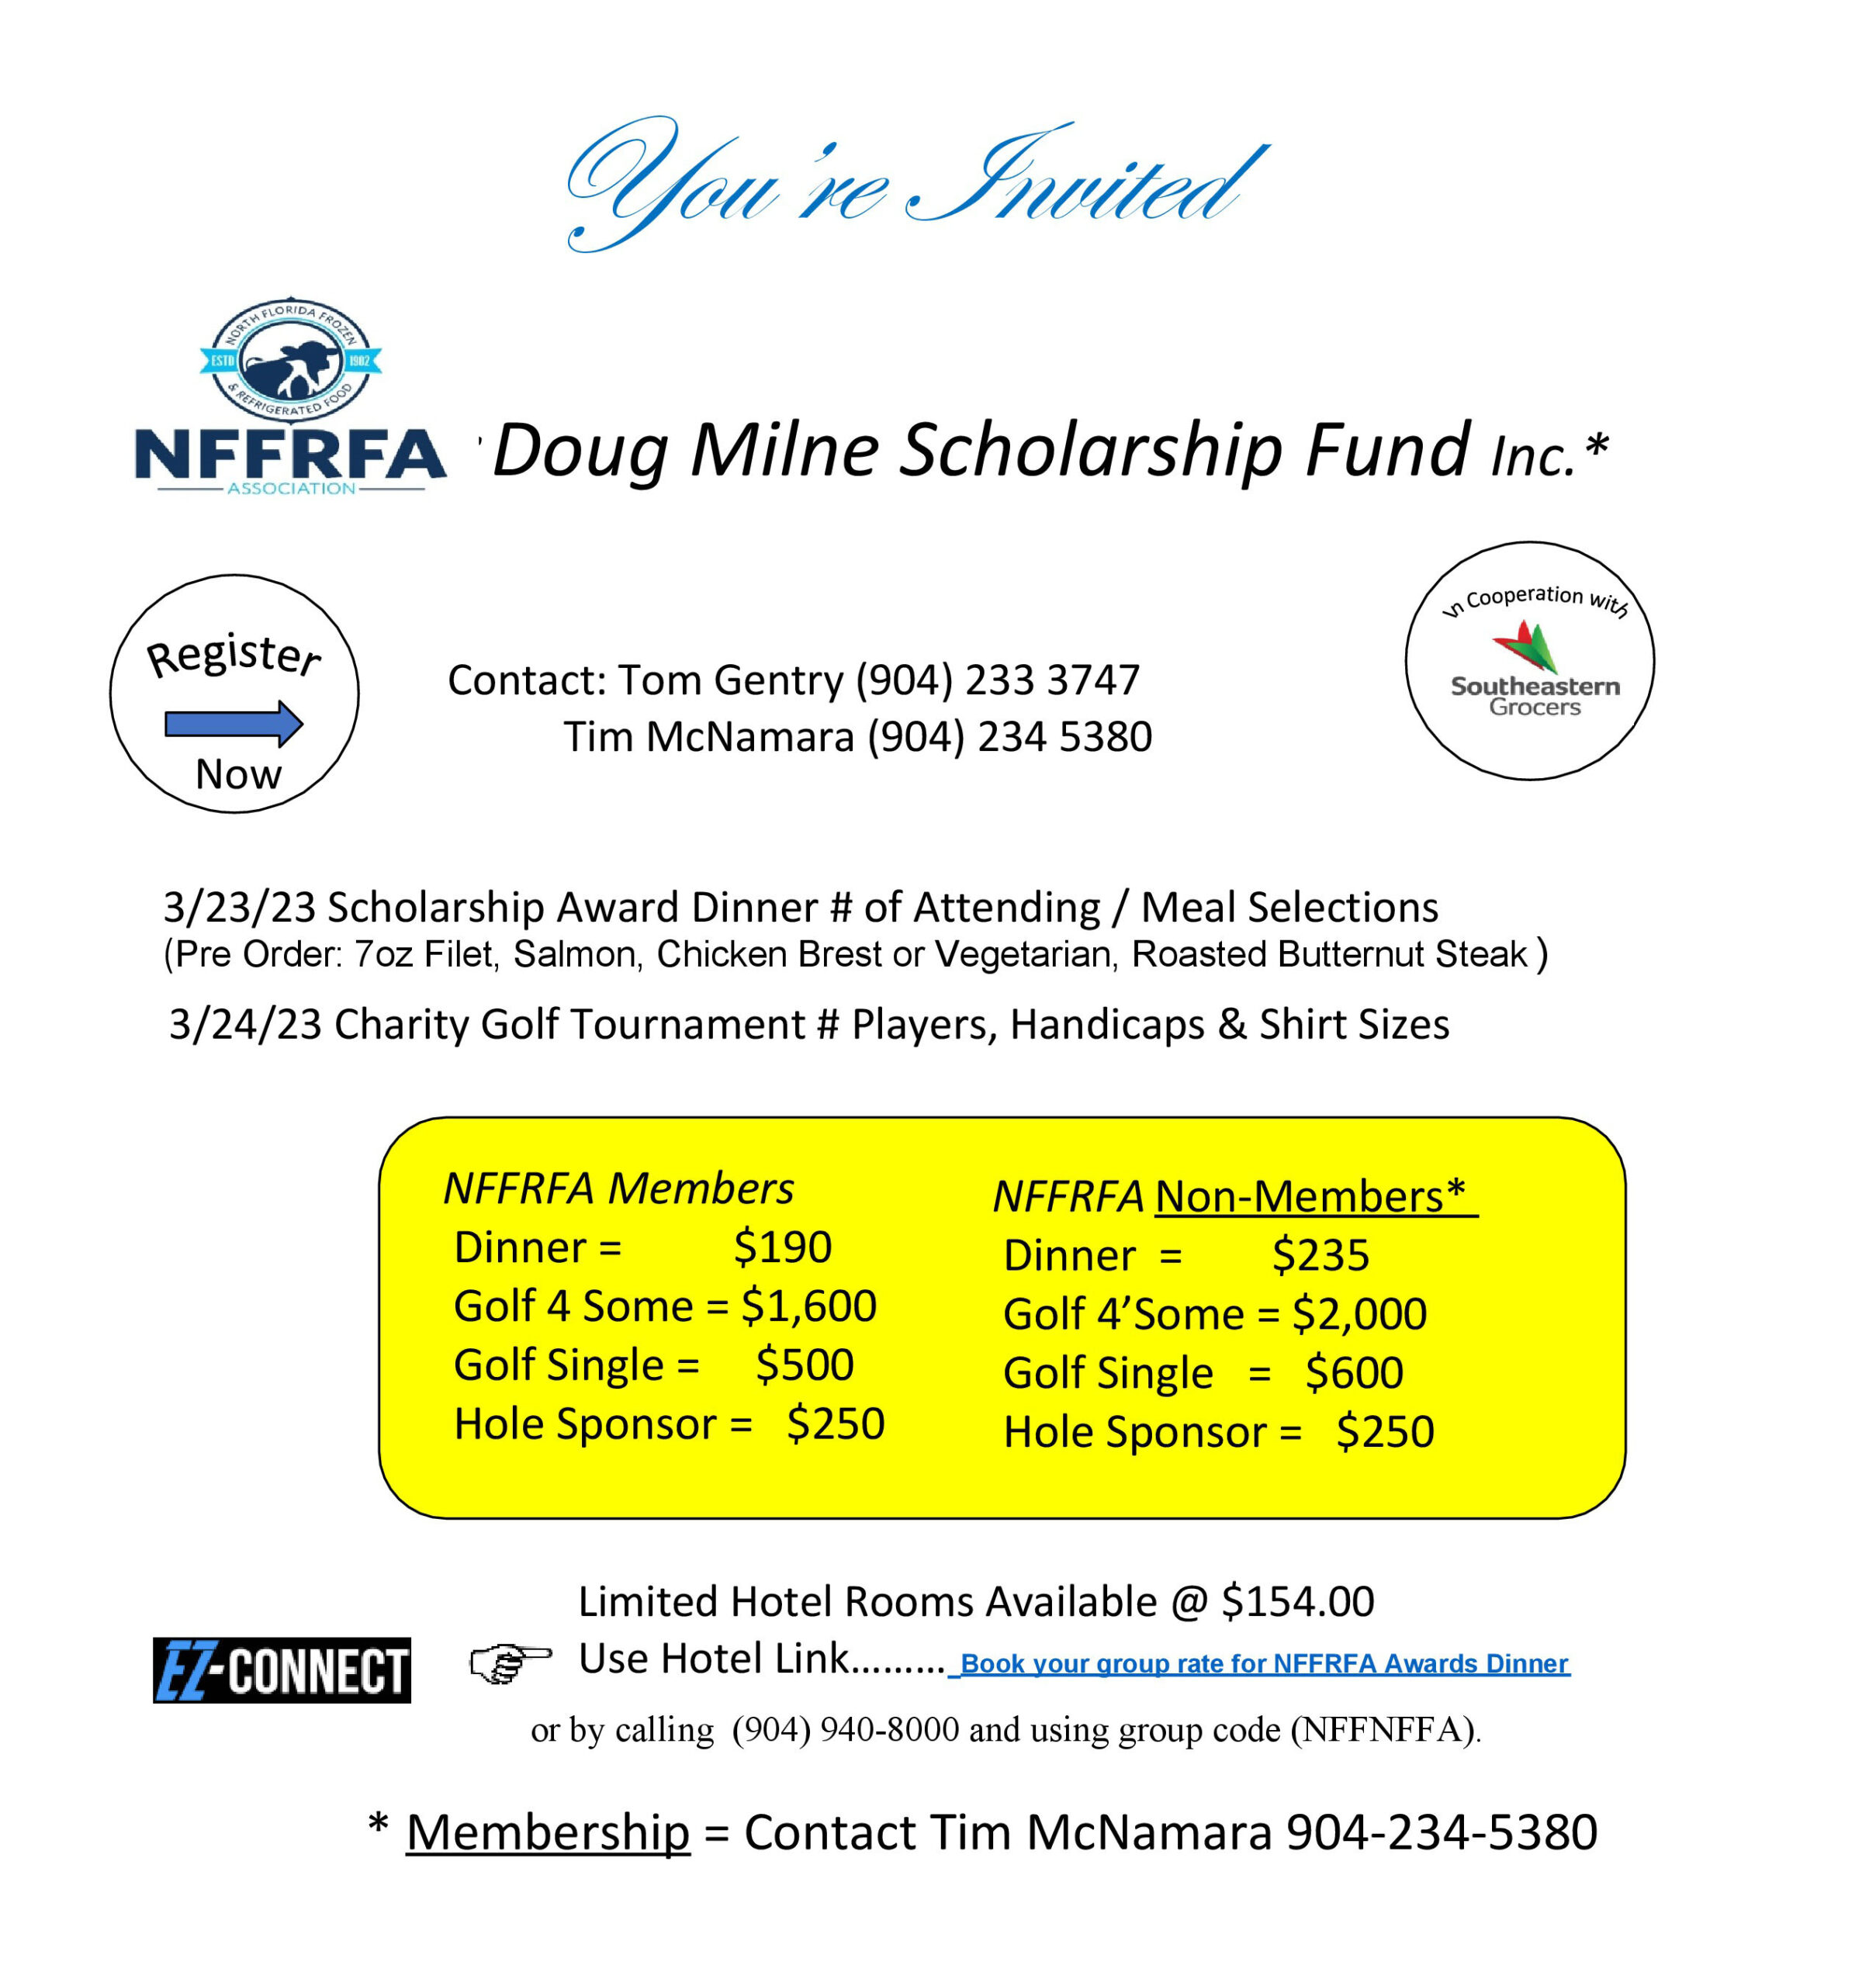 NFFRFA Doug Milne Scholarship Fund Inc.